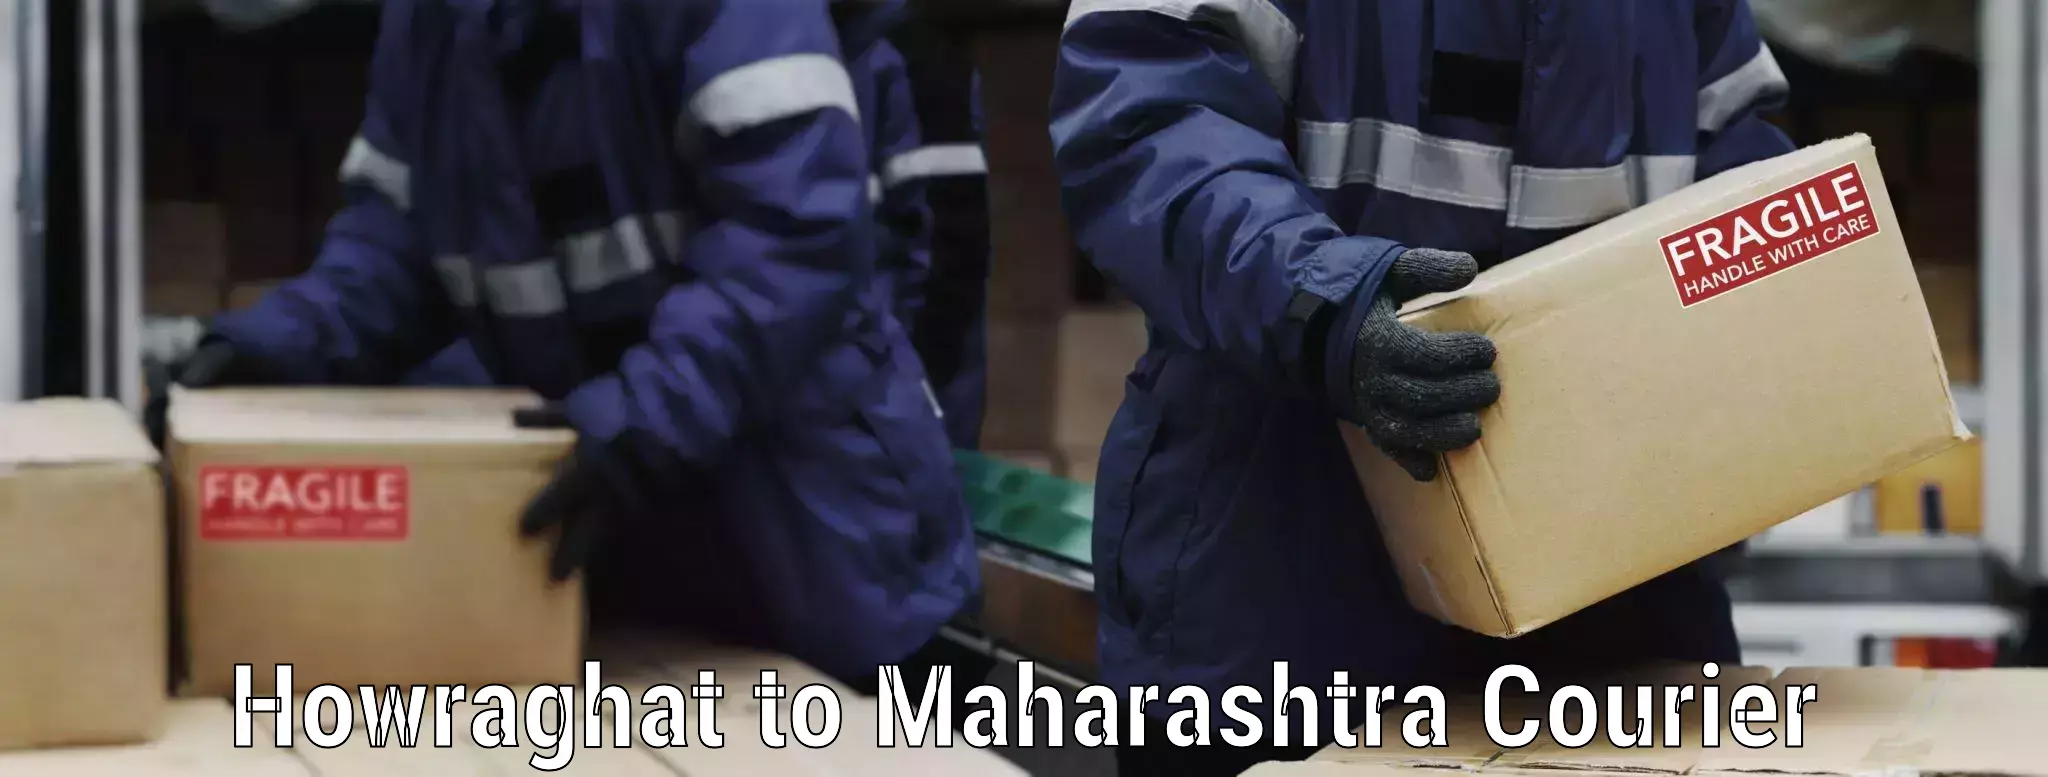 Home goods shifting Howraghat to Maharashtra